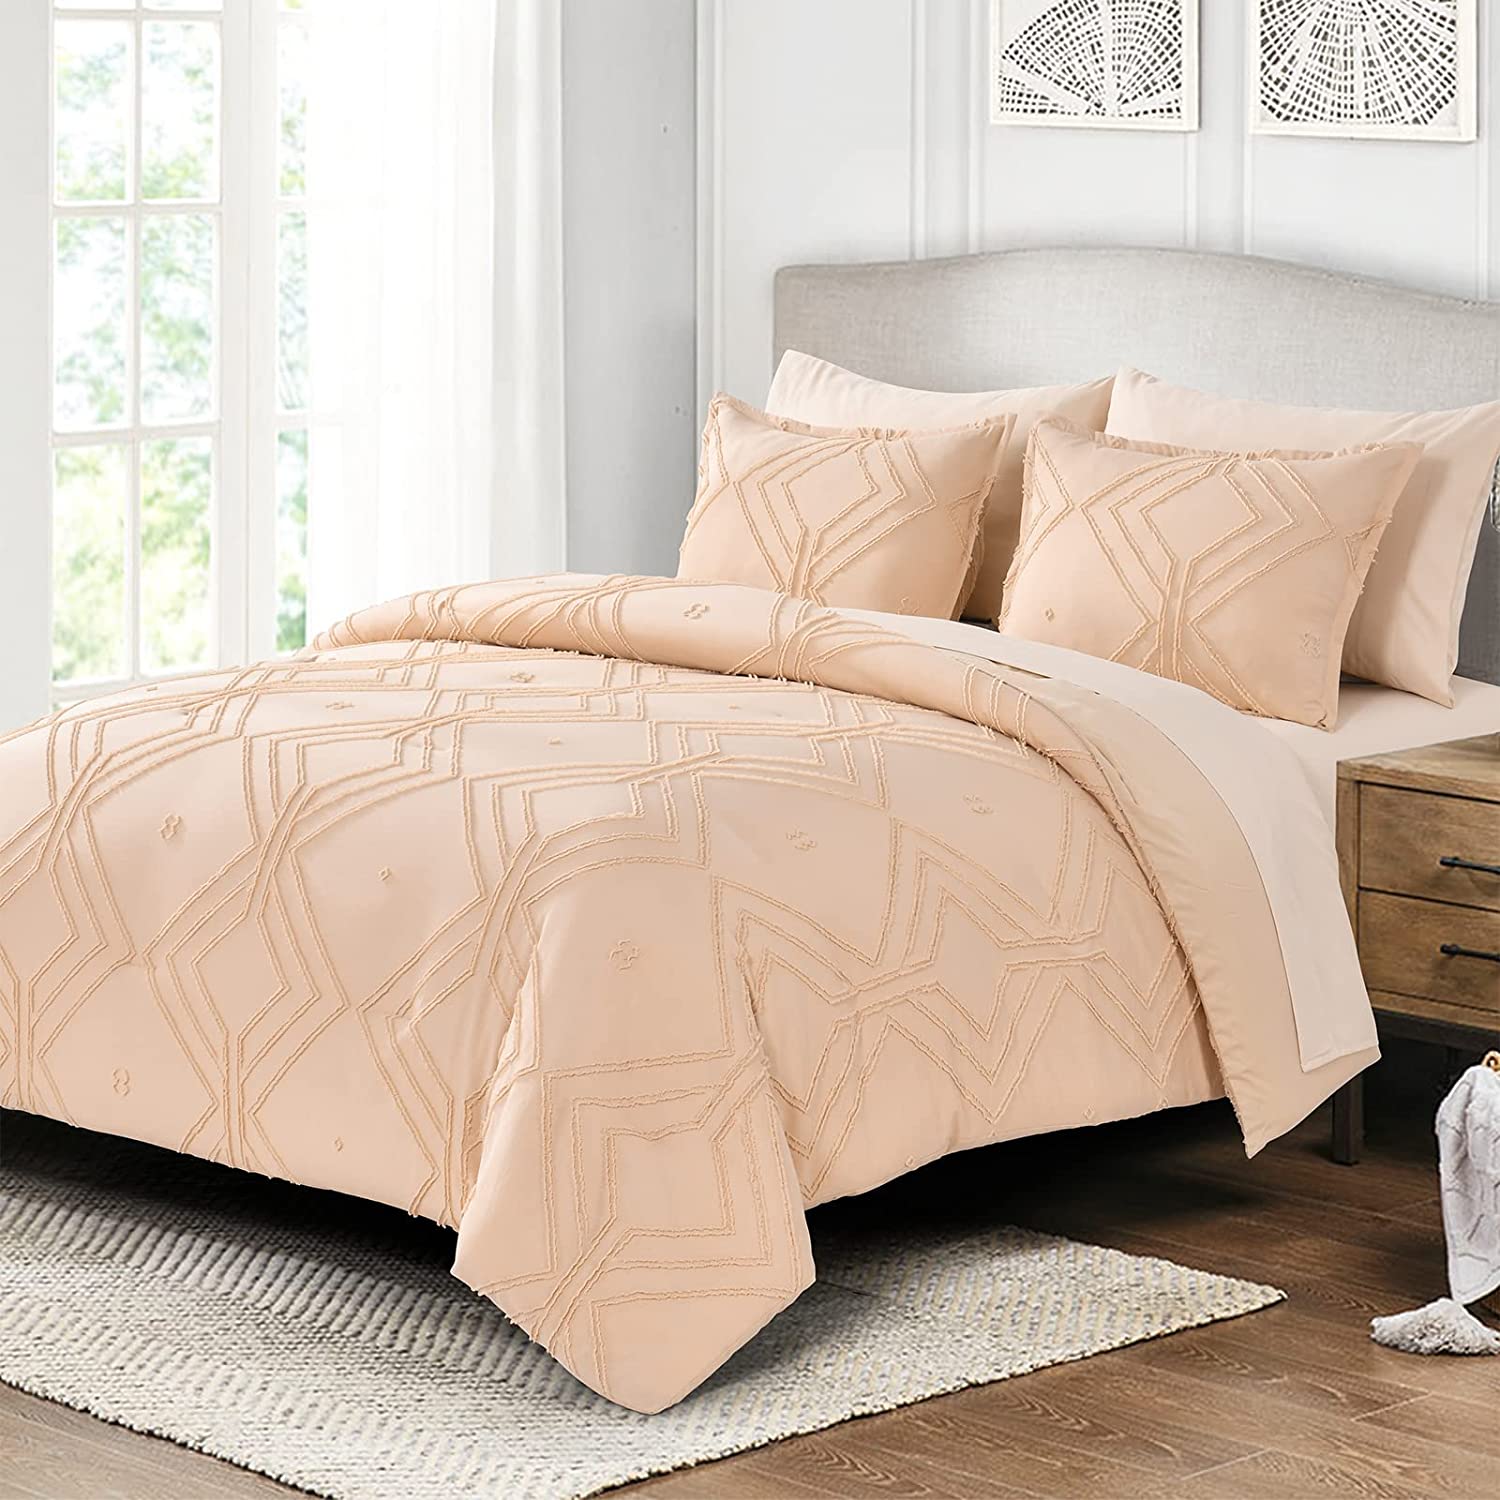 Shatex Tufted Comforter Twin XL Bedding Set- 2 Piece All Season Bedding Comforter Set, Ultra Soft Polyester Bedding Comforters- Rhombus Pattern